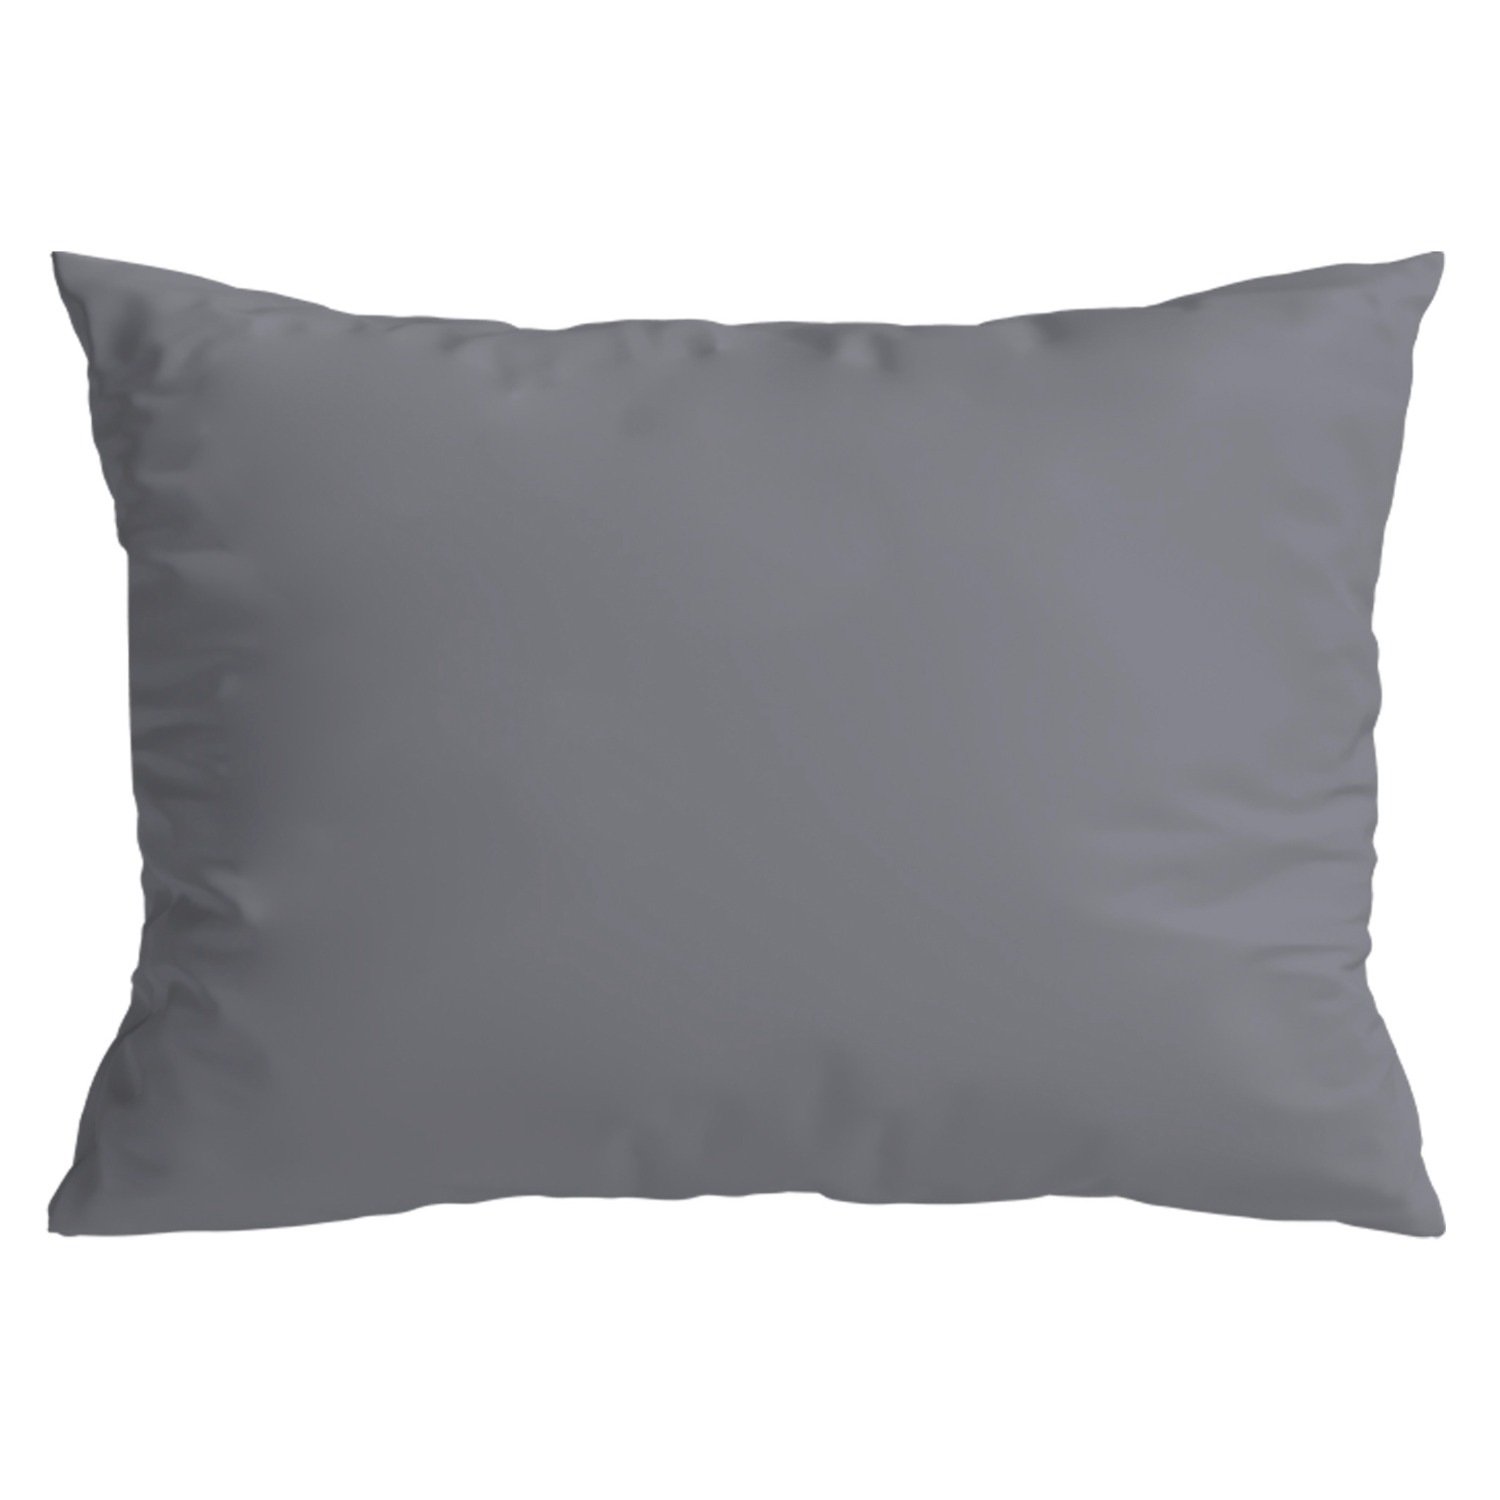 [maisone el BARA] Dear plain dark grey pillow cover